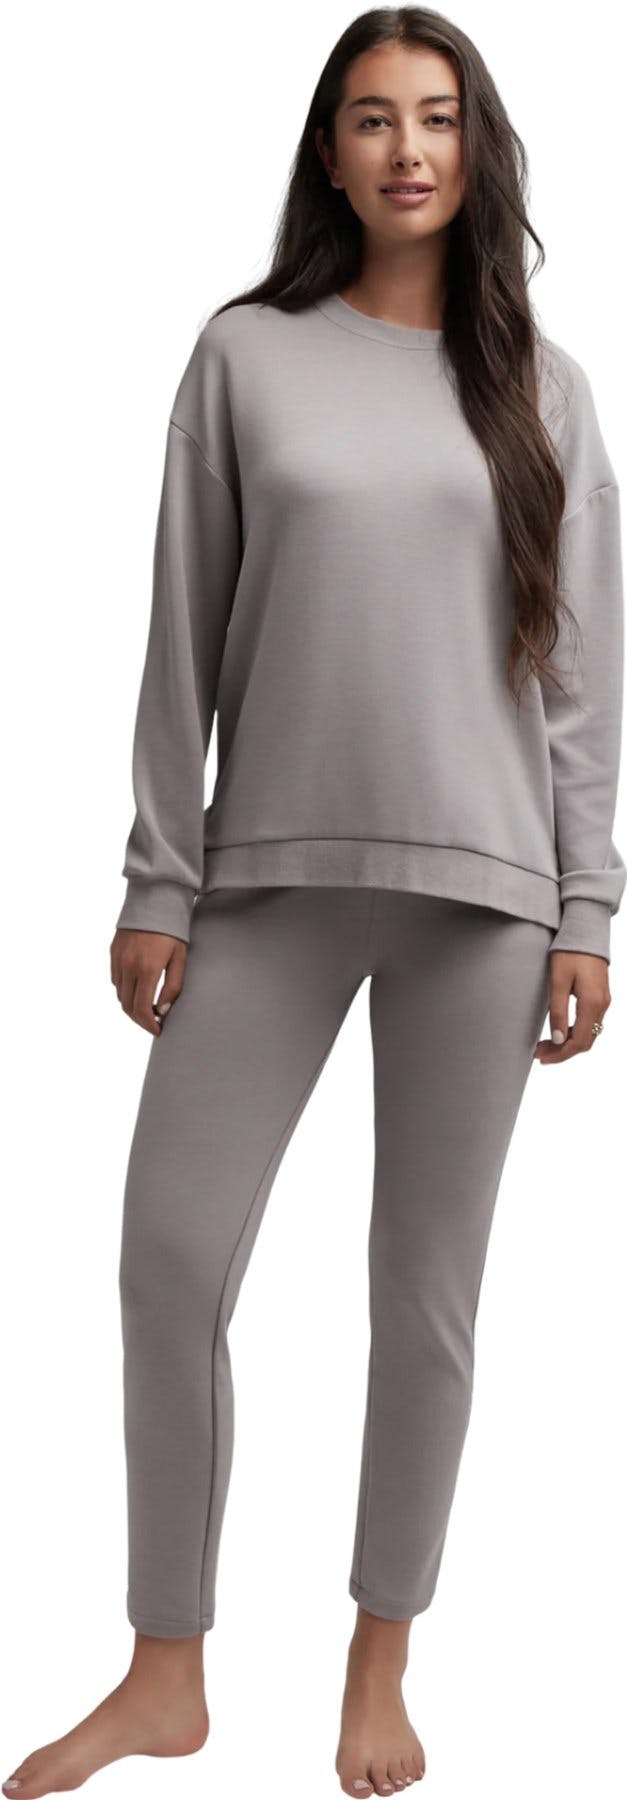 Product image for Sunday Crewneck Sweatshirt - Women's